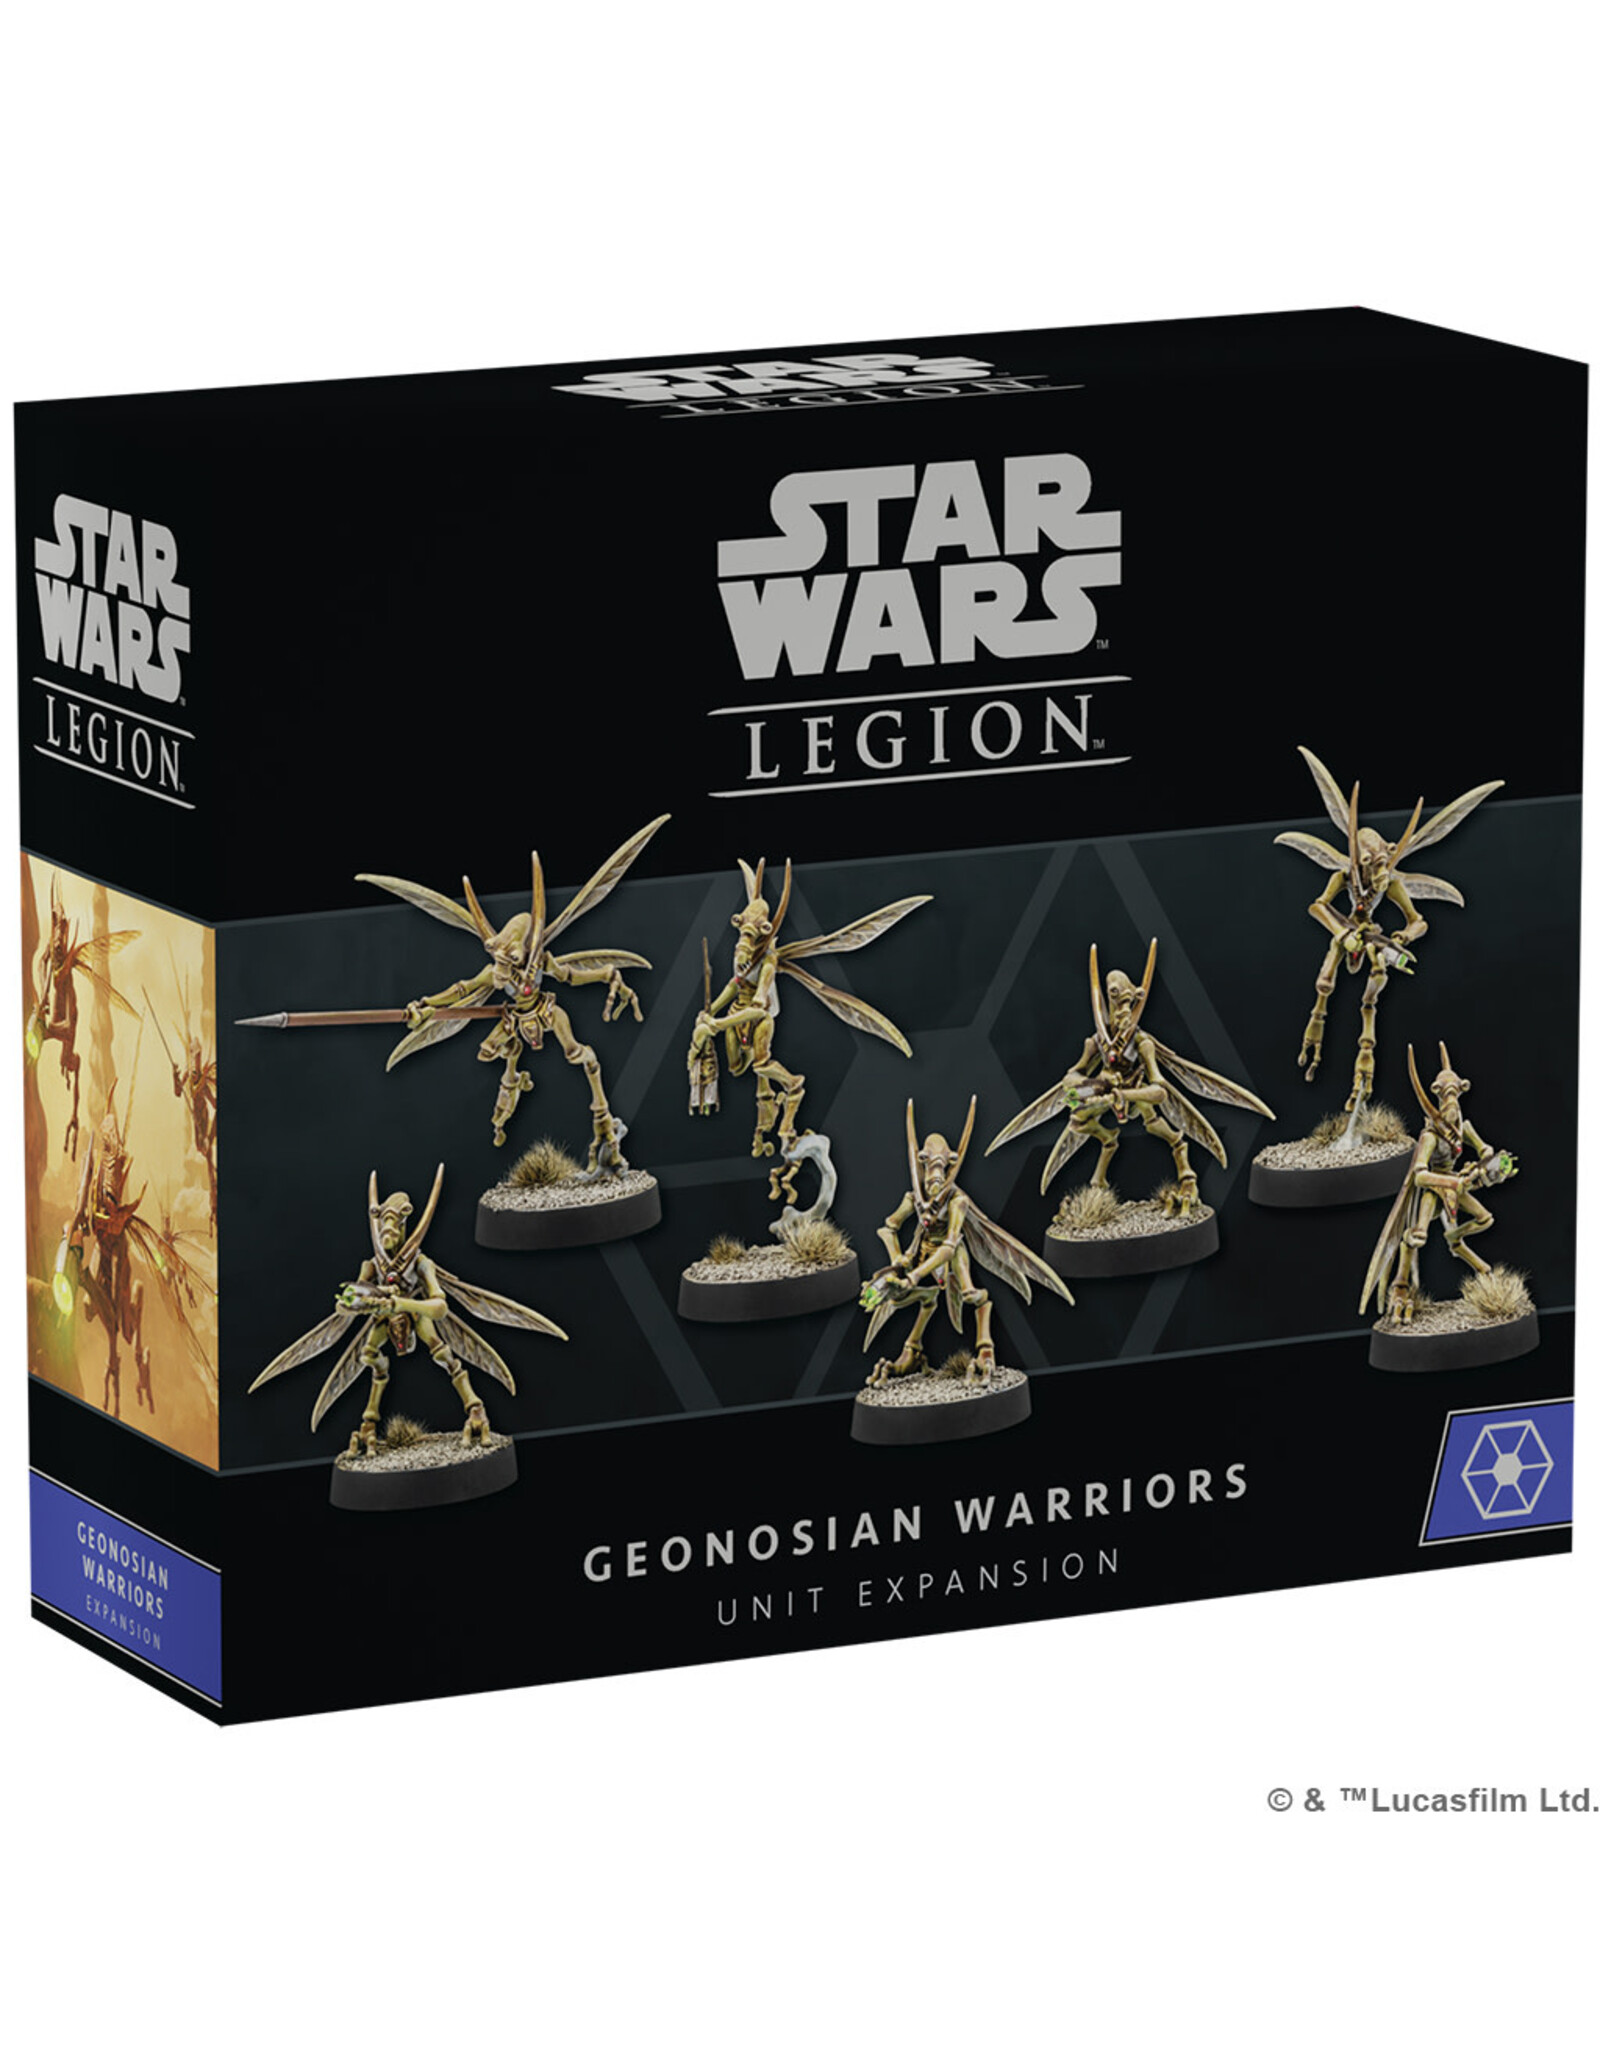 STAR WARS LEGION Star Wars Legion Geonosian Warriors Unit Expansion